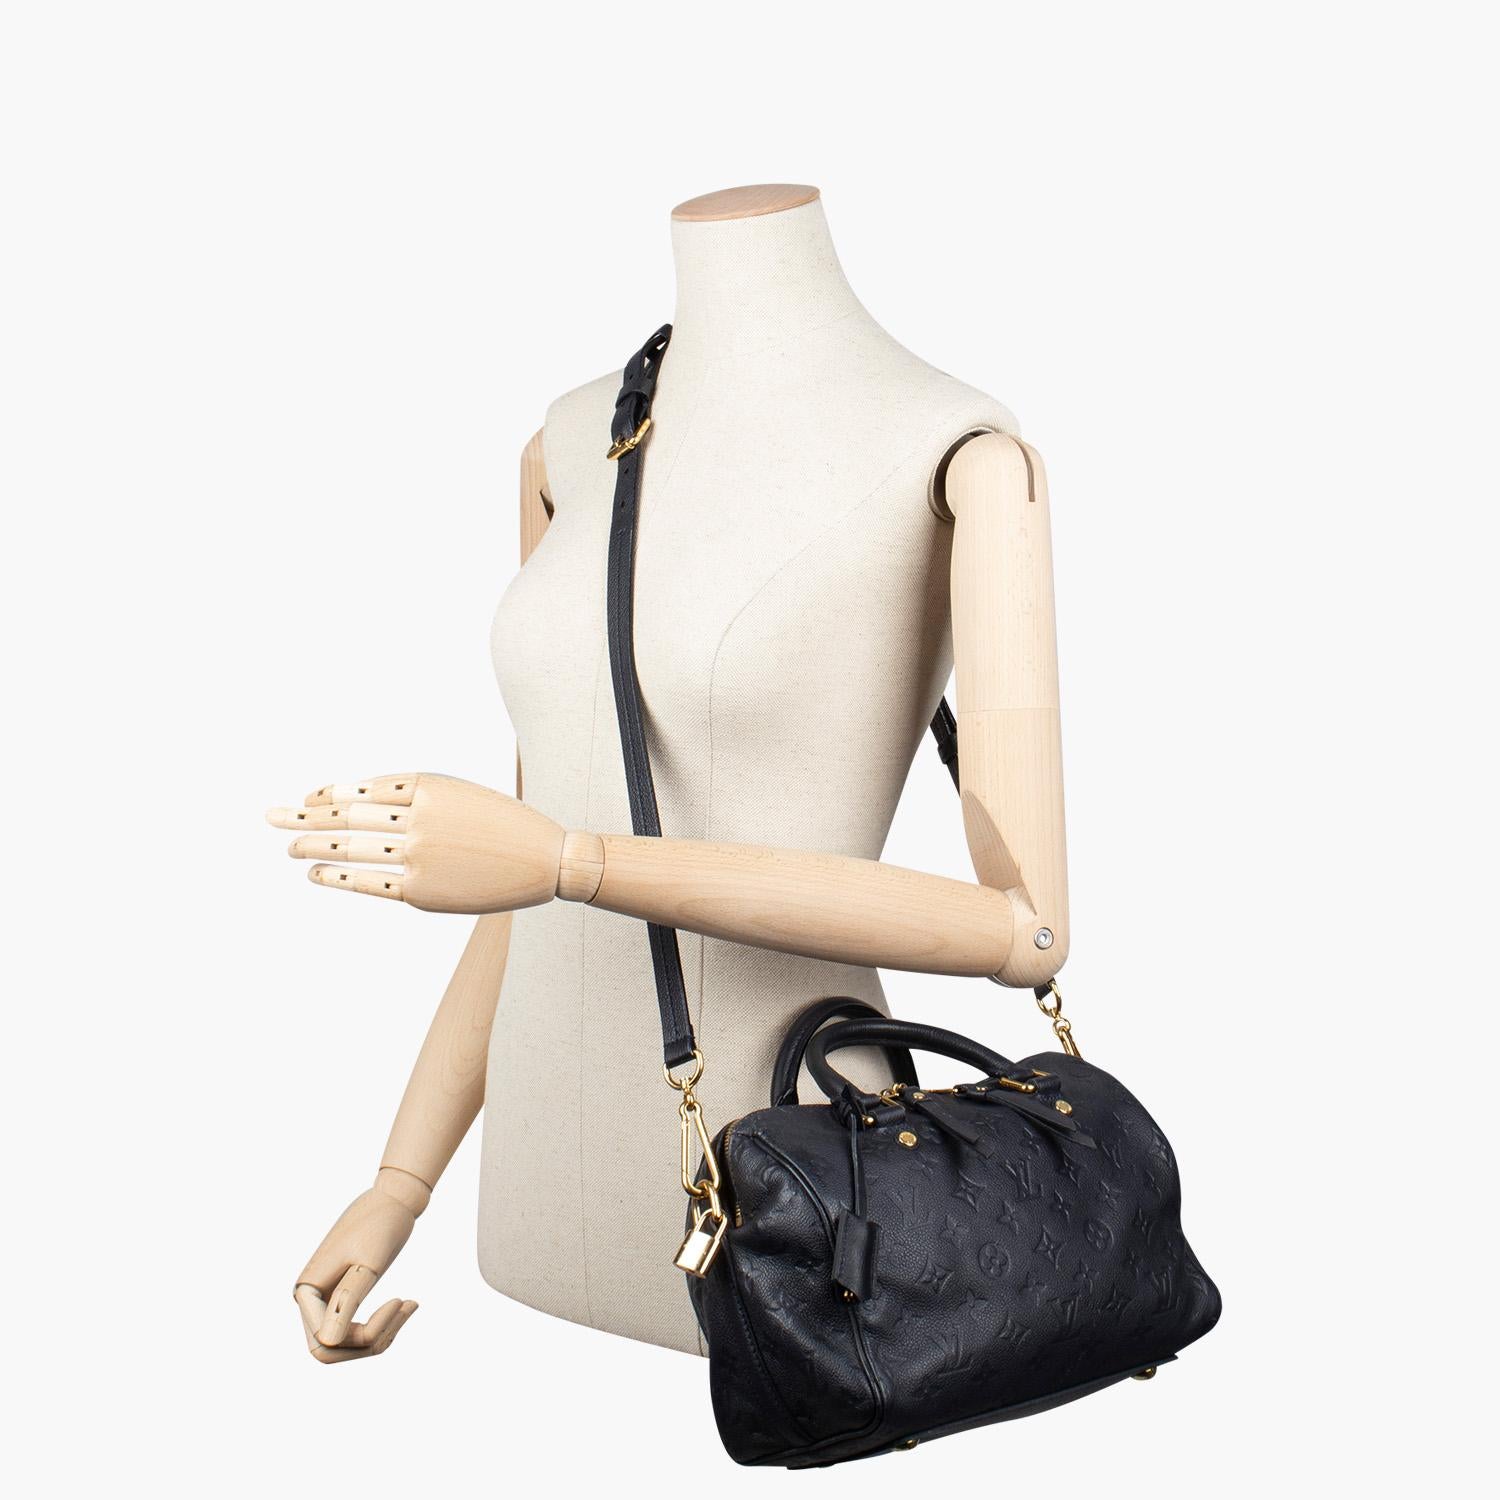 Louis Vuitton Empreinte Speedy Bandoulière 25 Handbag  In Good Condition For Sale In Sundbyberg, SE